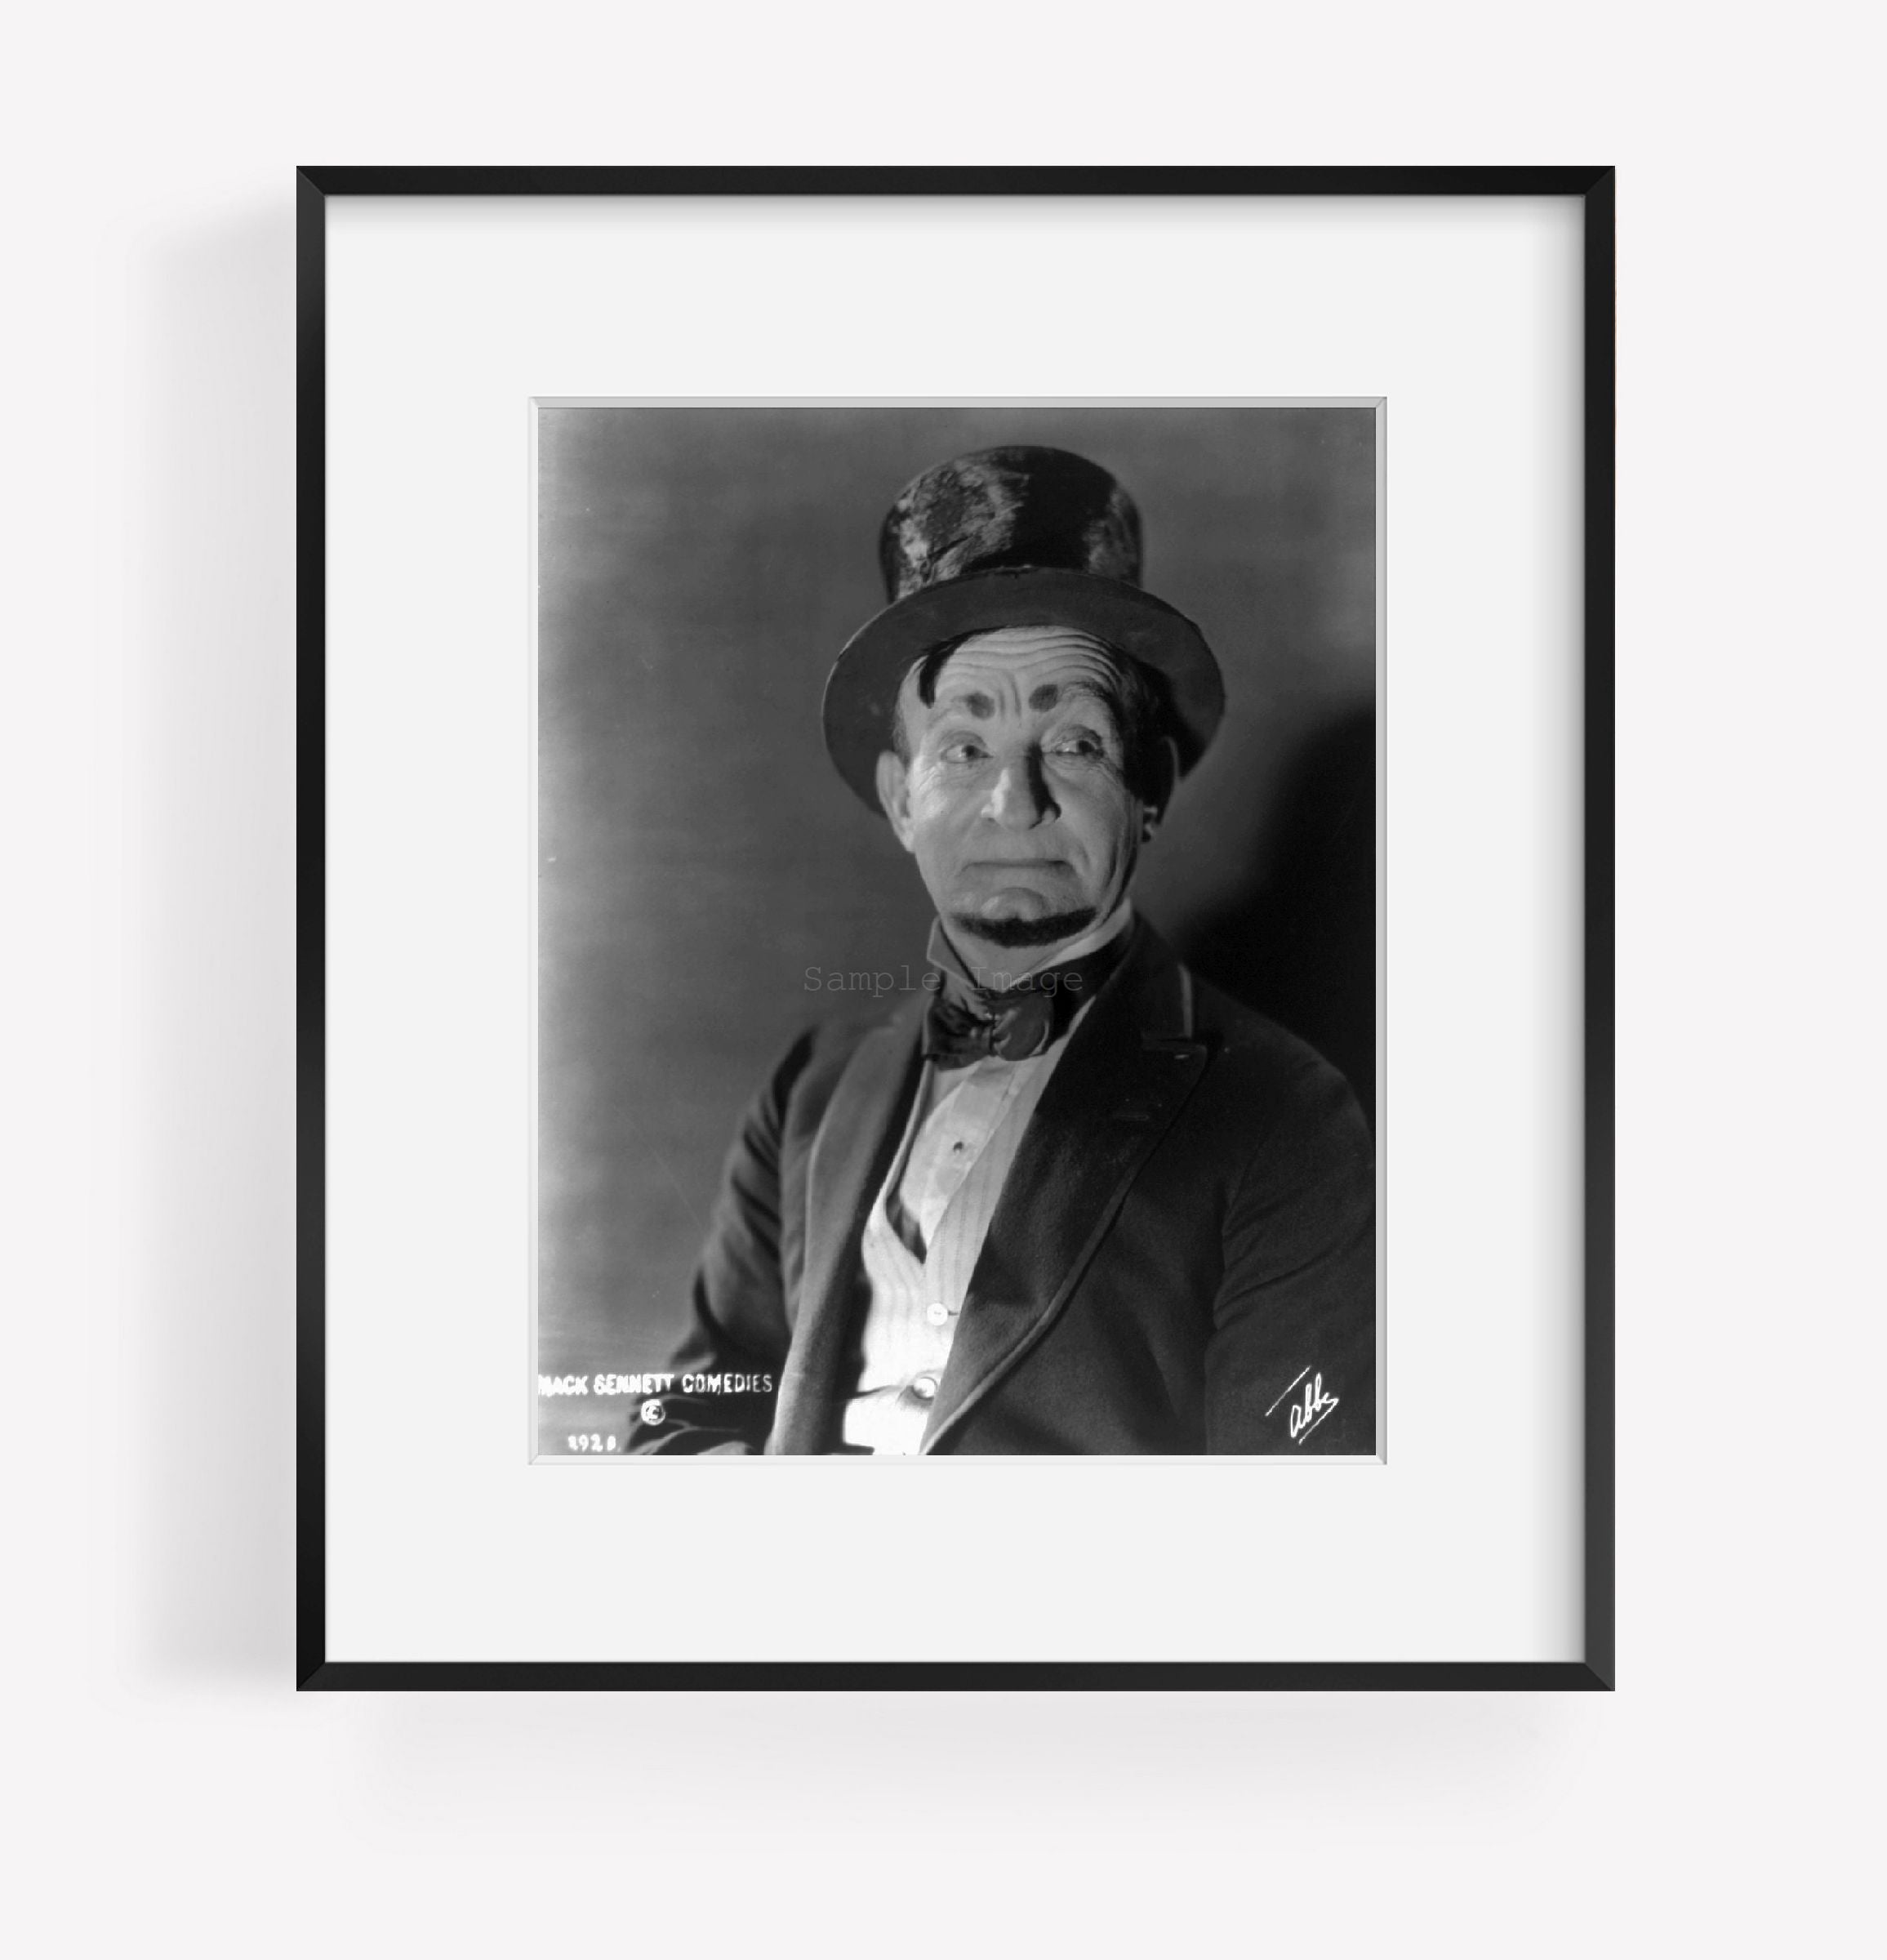 Photo: Comedian with small beard, Mack Sennett Comedies, c1920